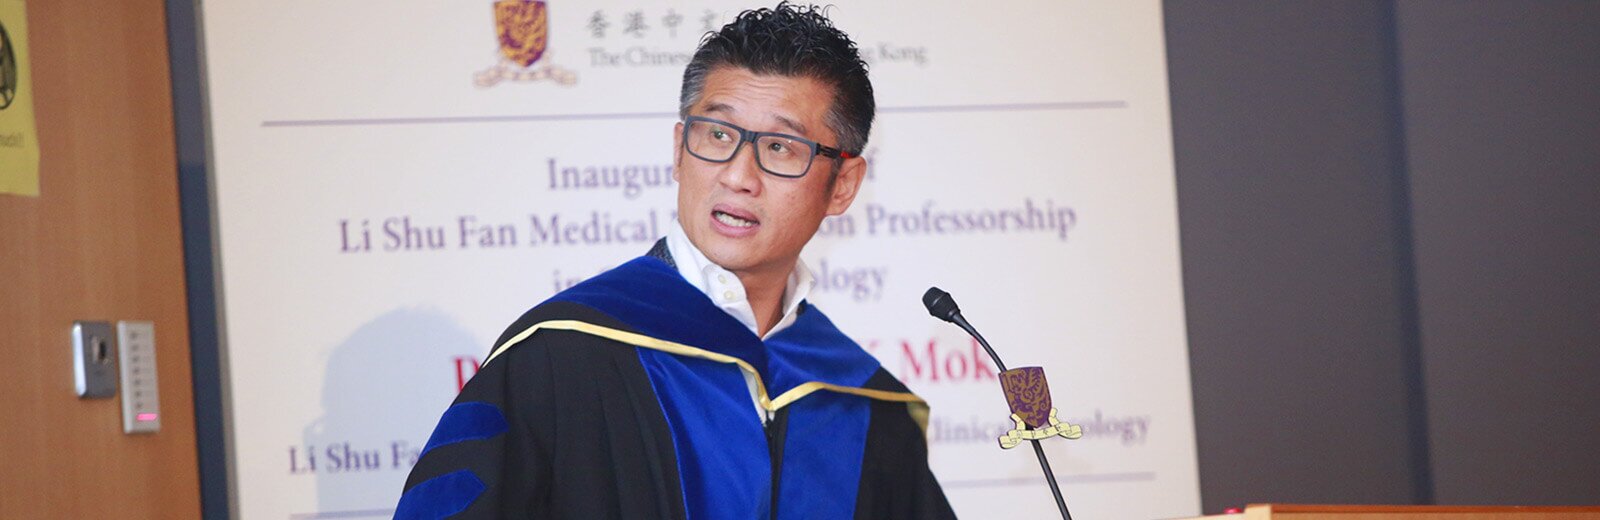 Li Shu Fan Medical Foundation Professorship in Clinical Oncology